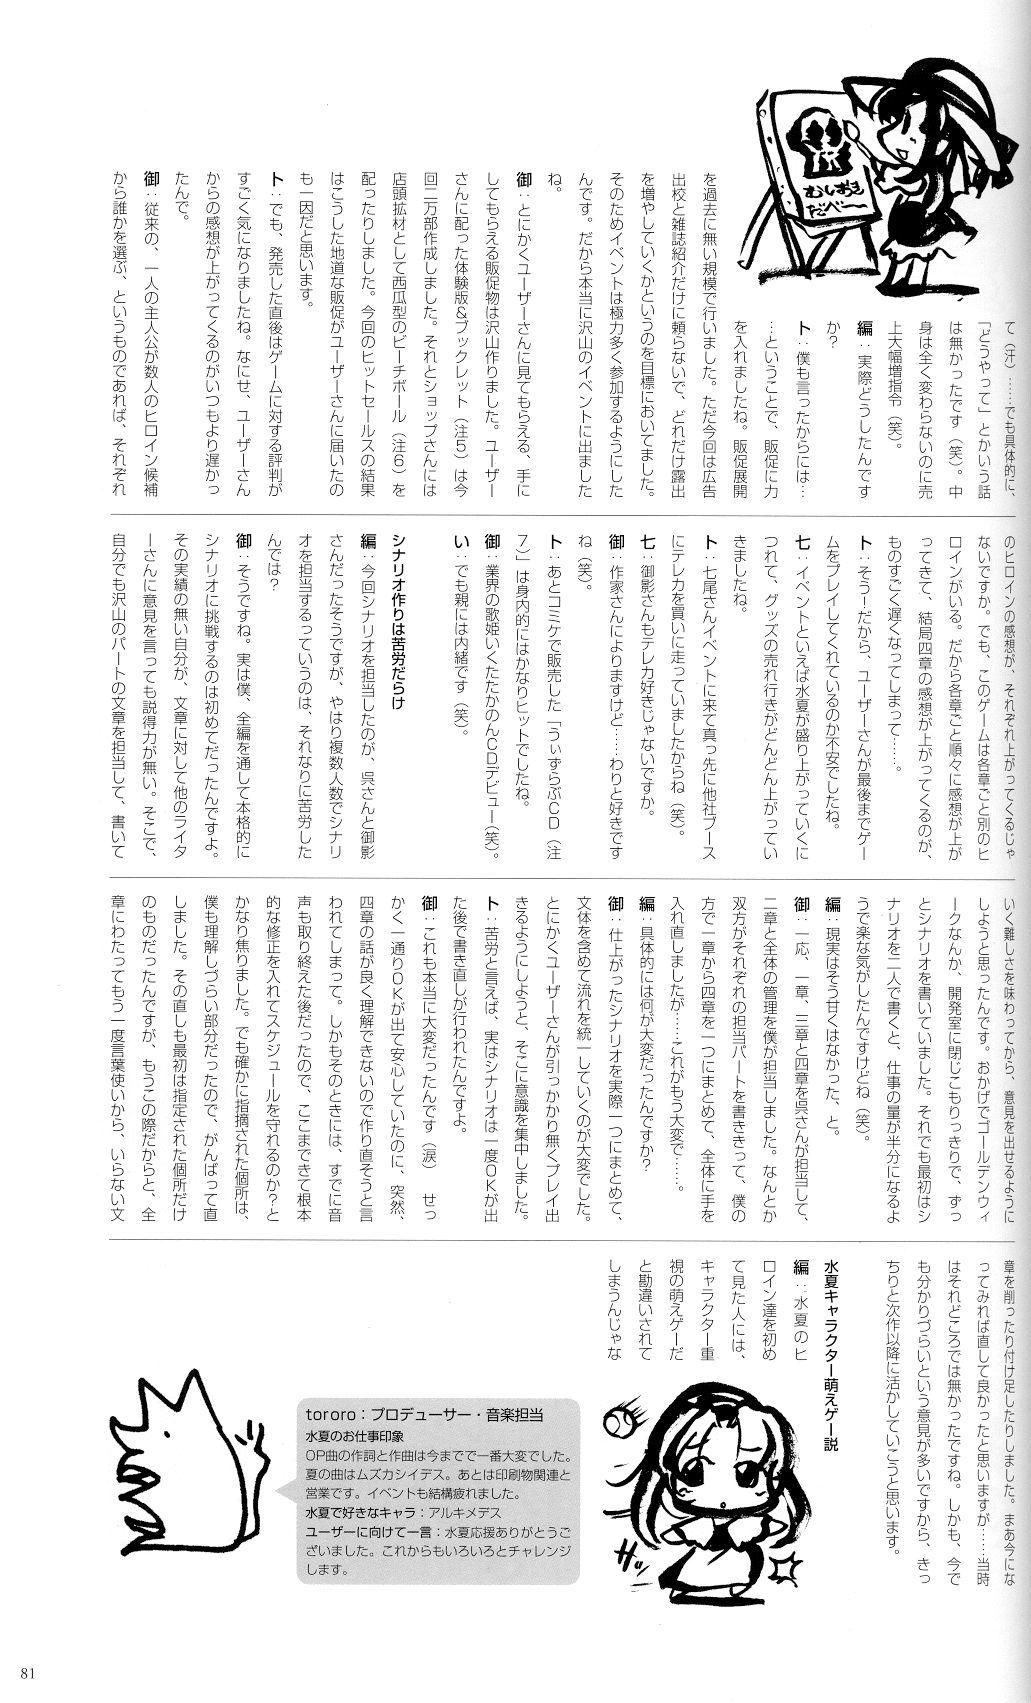 SUIKA Official Visual Fan Book 89